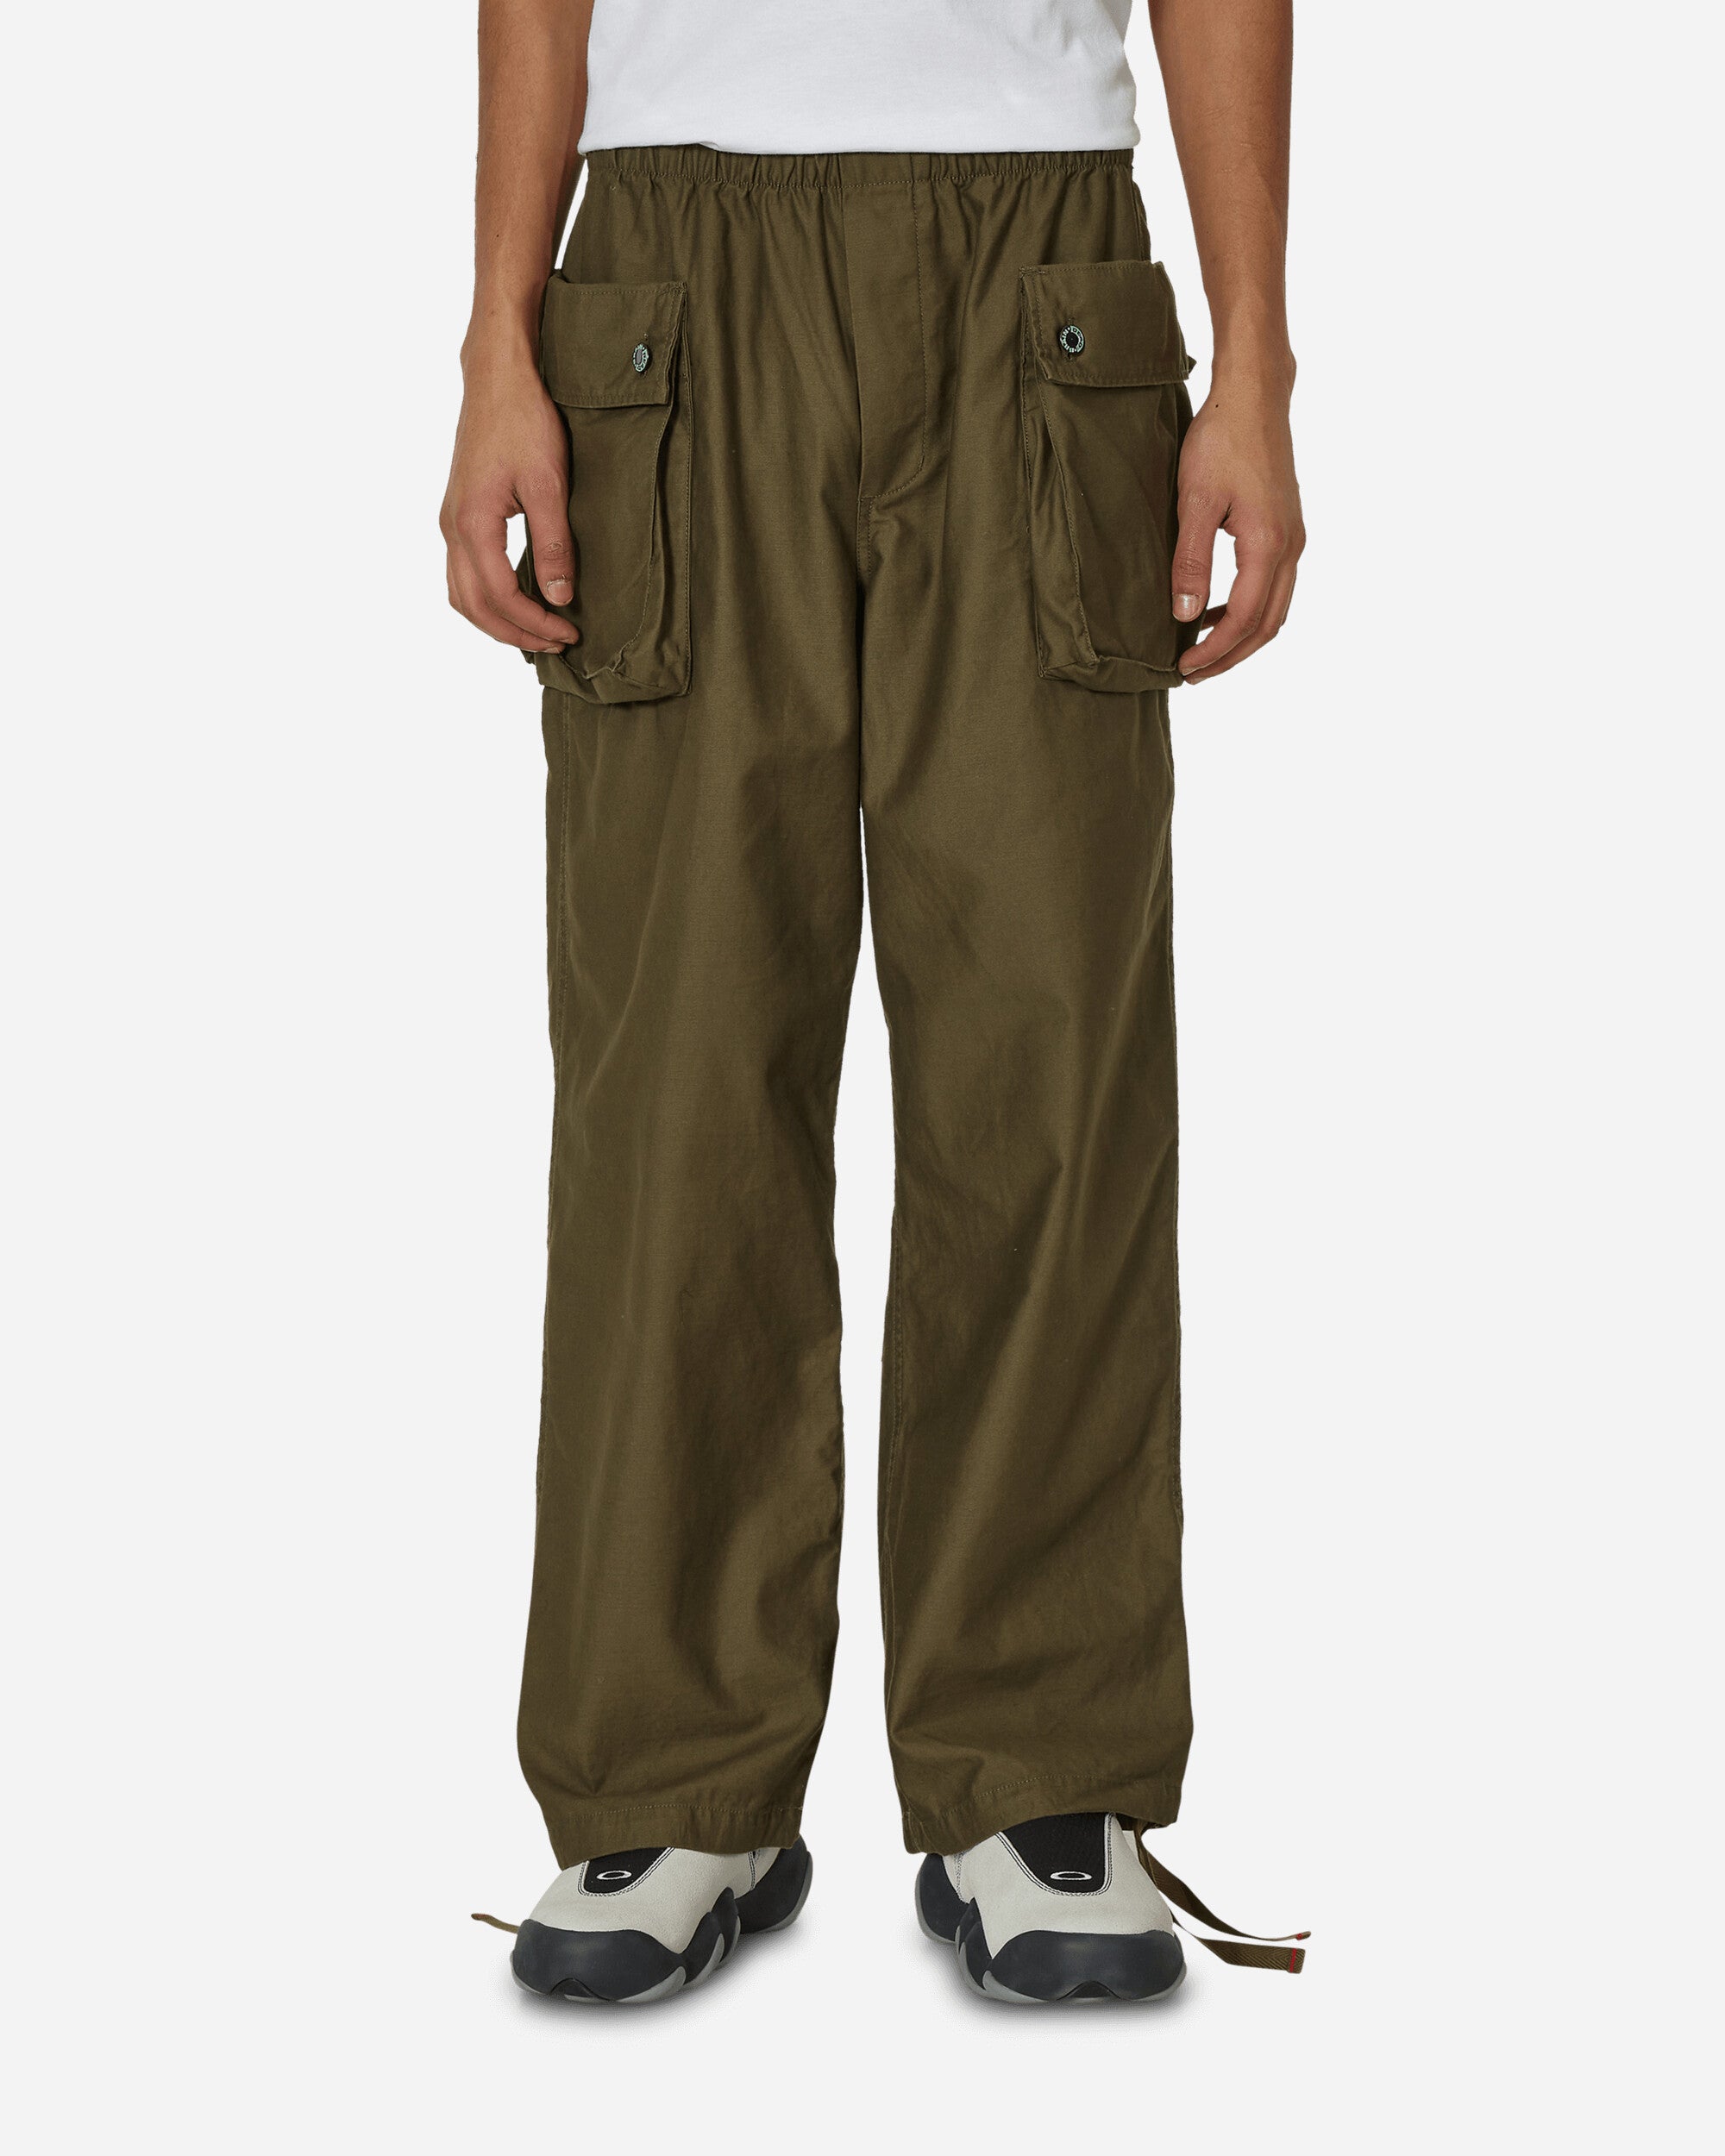 Military Cloth P44 Jungle Pants Olive